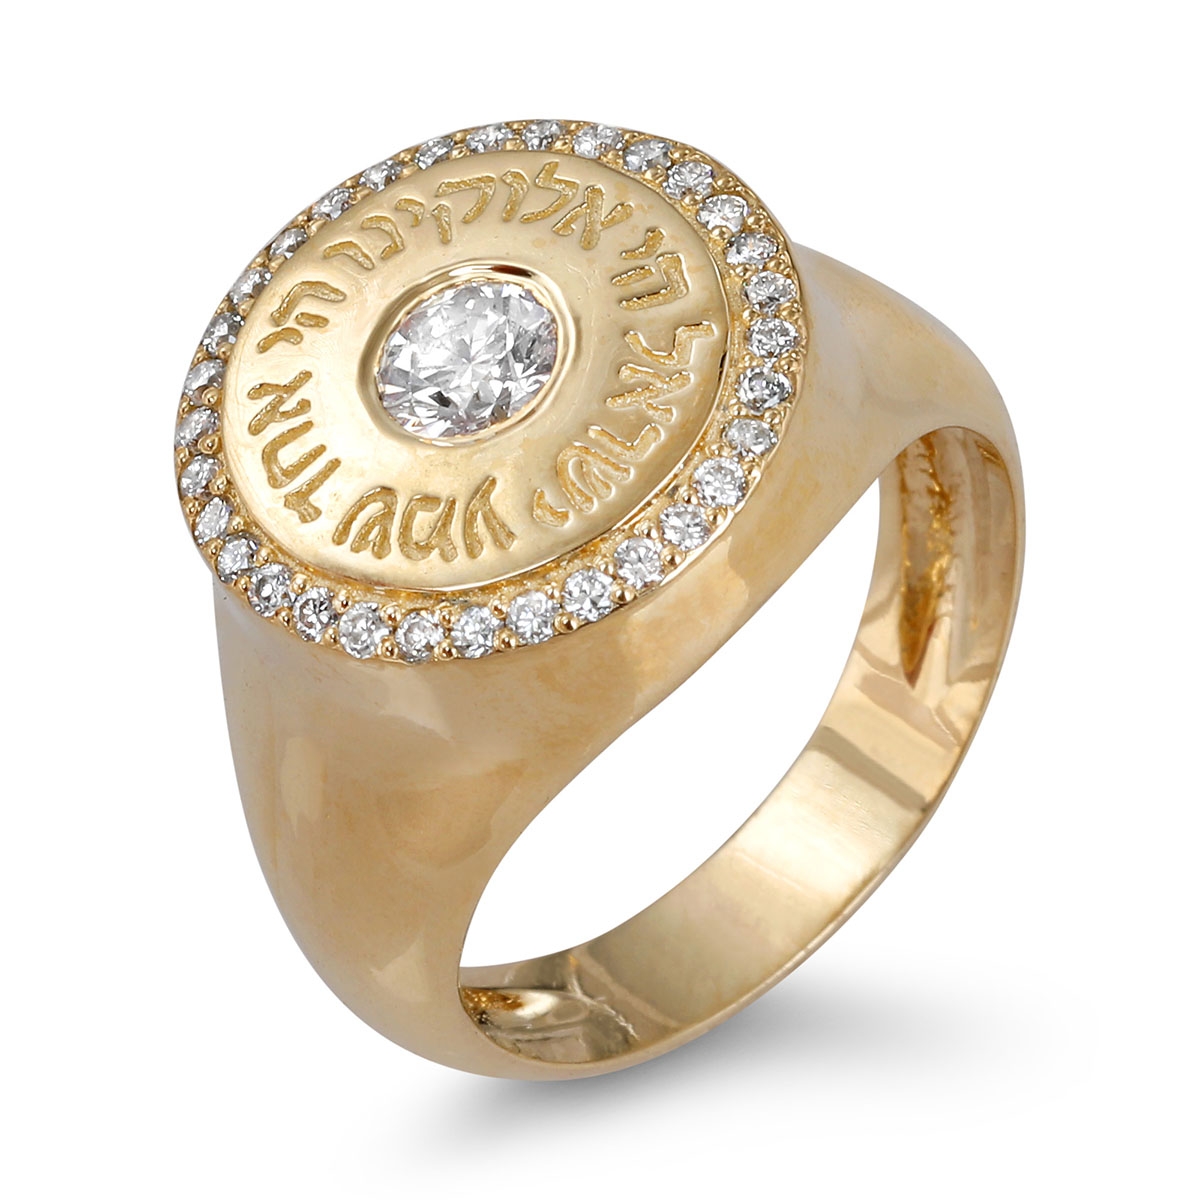 Anbinder Jewelry 14K Gold Shema Yisrael Ring With Diamonds (Deuteronomy 6:4) - 1